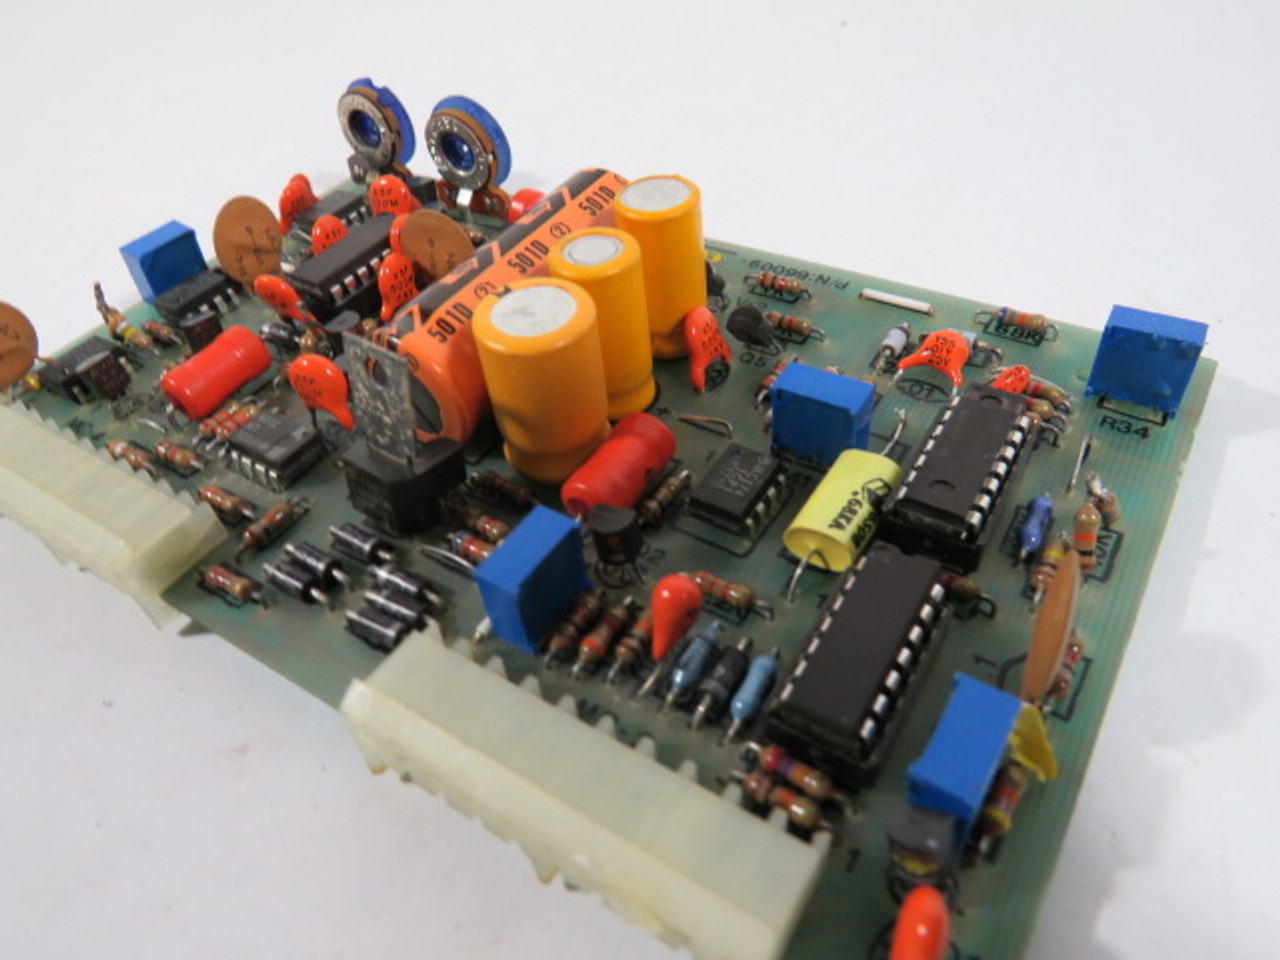 Zycron 66009-101 Voltage Module Control USED